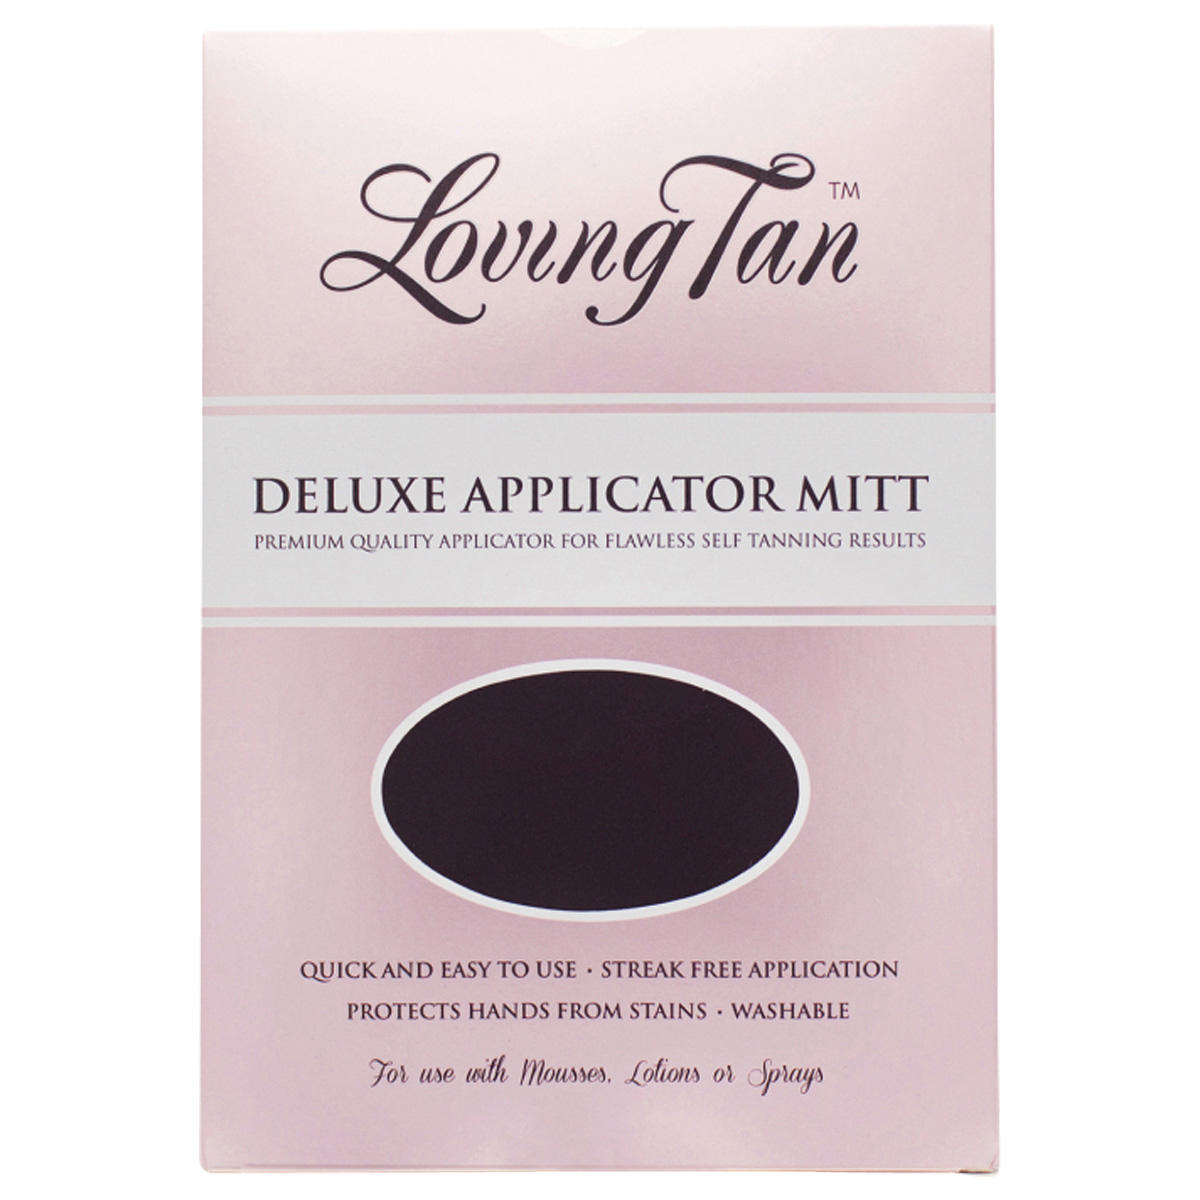 Loving Tan Deluxe Applicator Mitt  - 1